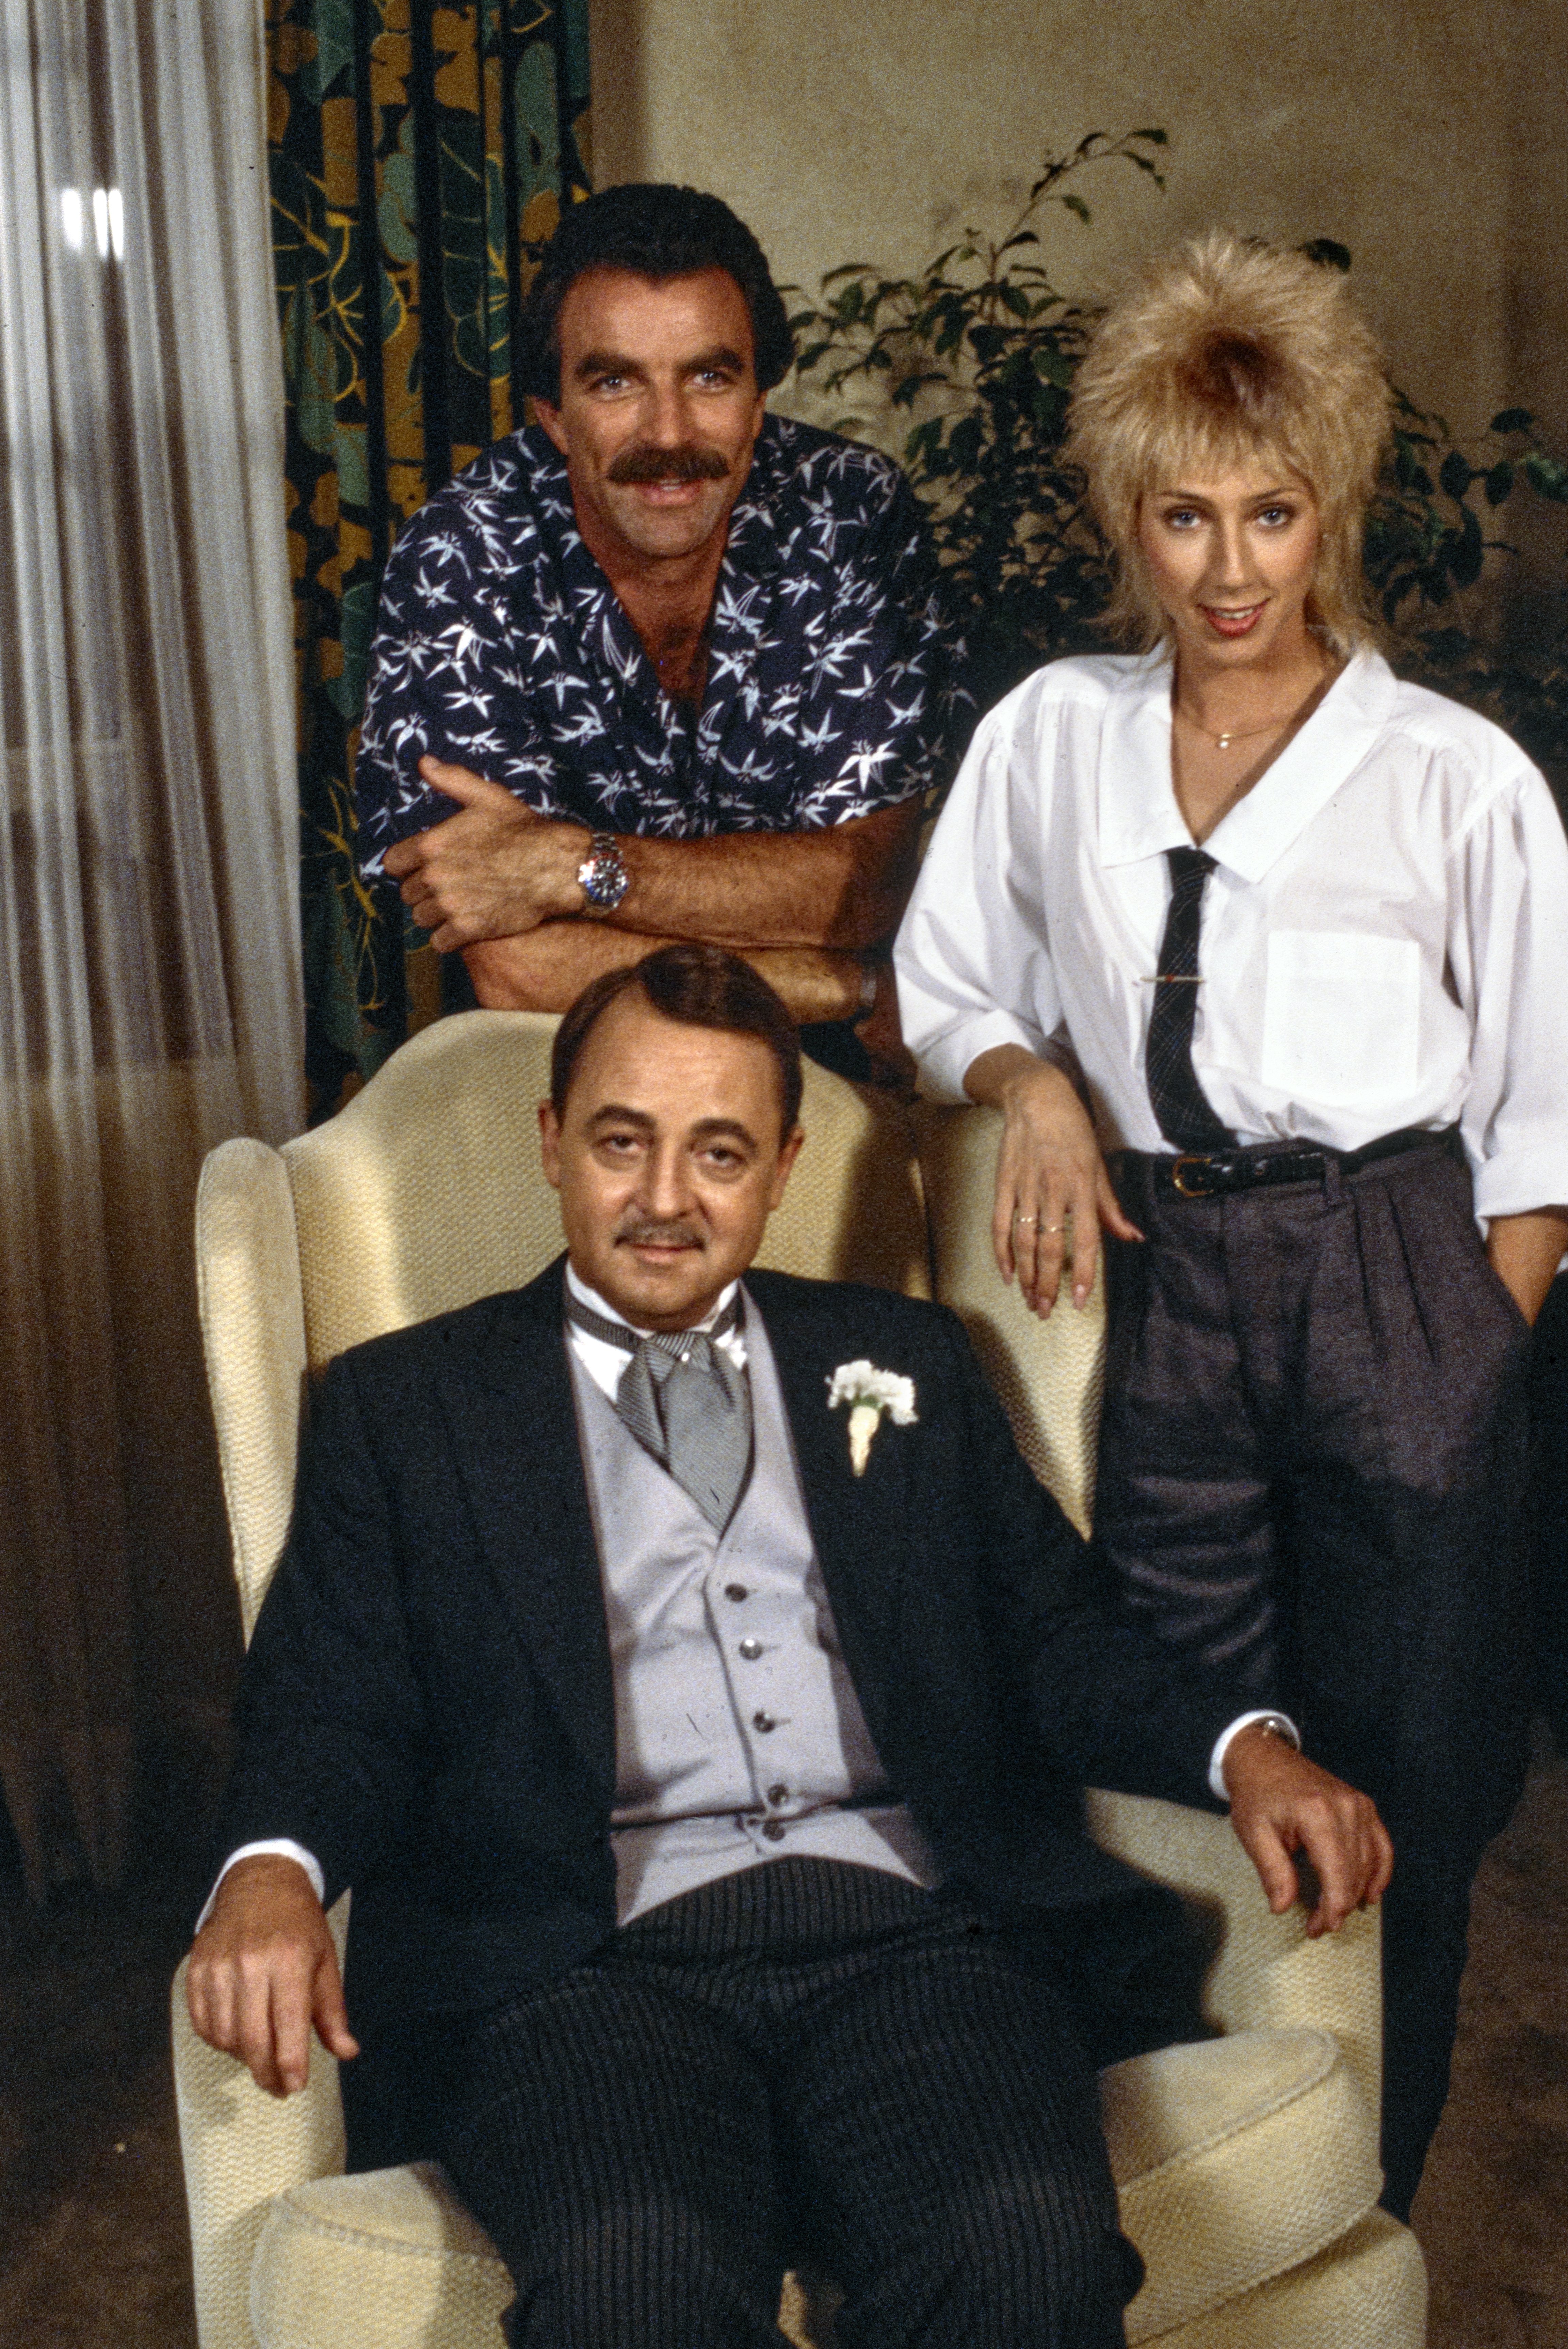 Tom Selleck (als Magnum), Jillie Mack (als Sally Ponting) und John Hillerman (als Higgins) in der MAGNUM PI-Folge "Professor Jonathan Higgins", die am 10. Januar 1985 ausgestrahlt wurde. | Quelle: Getty Images